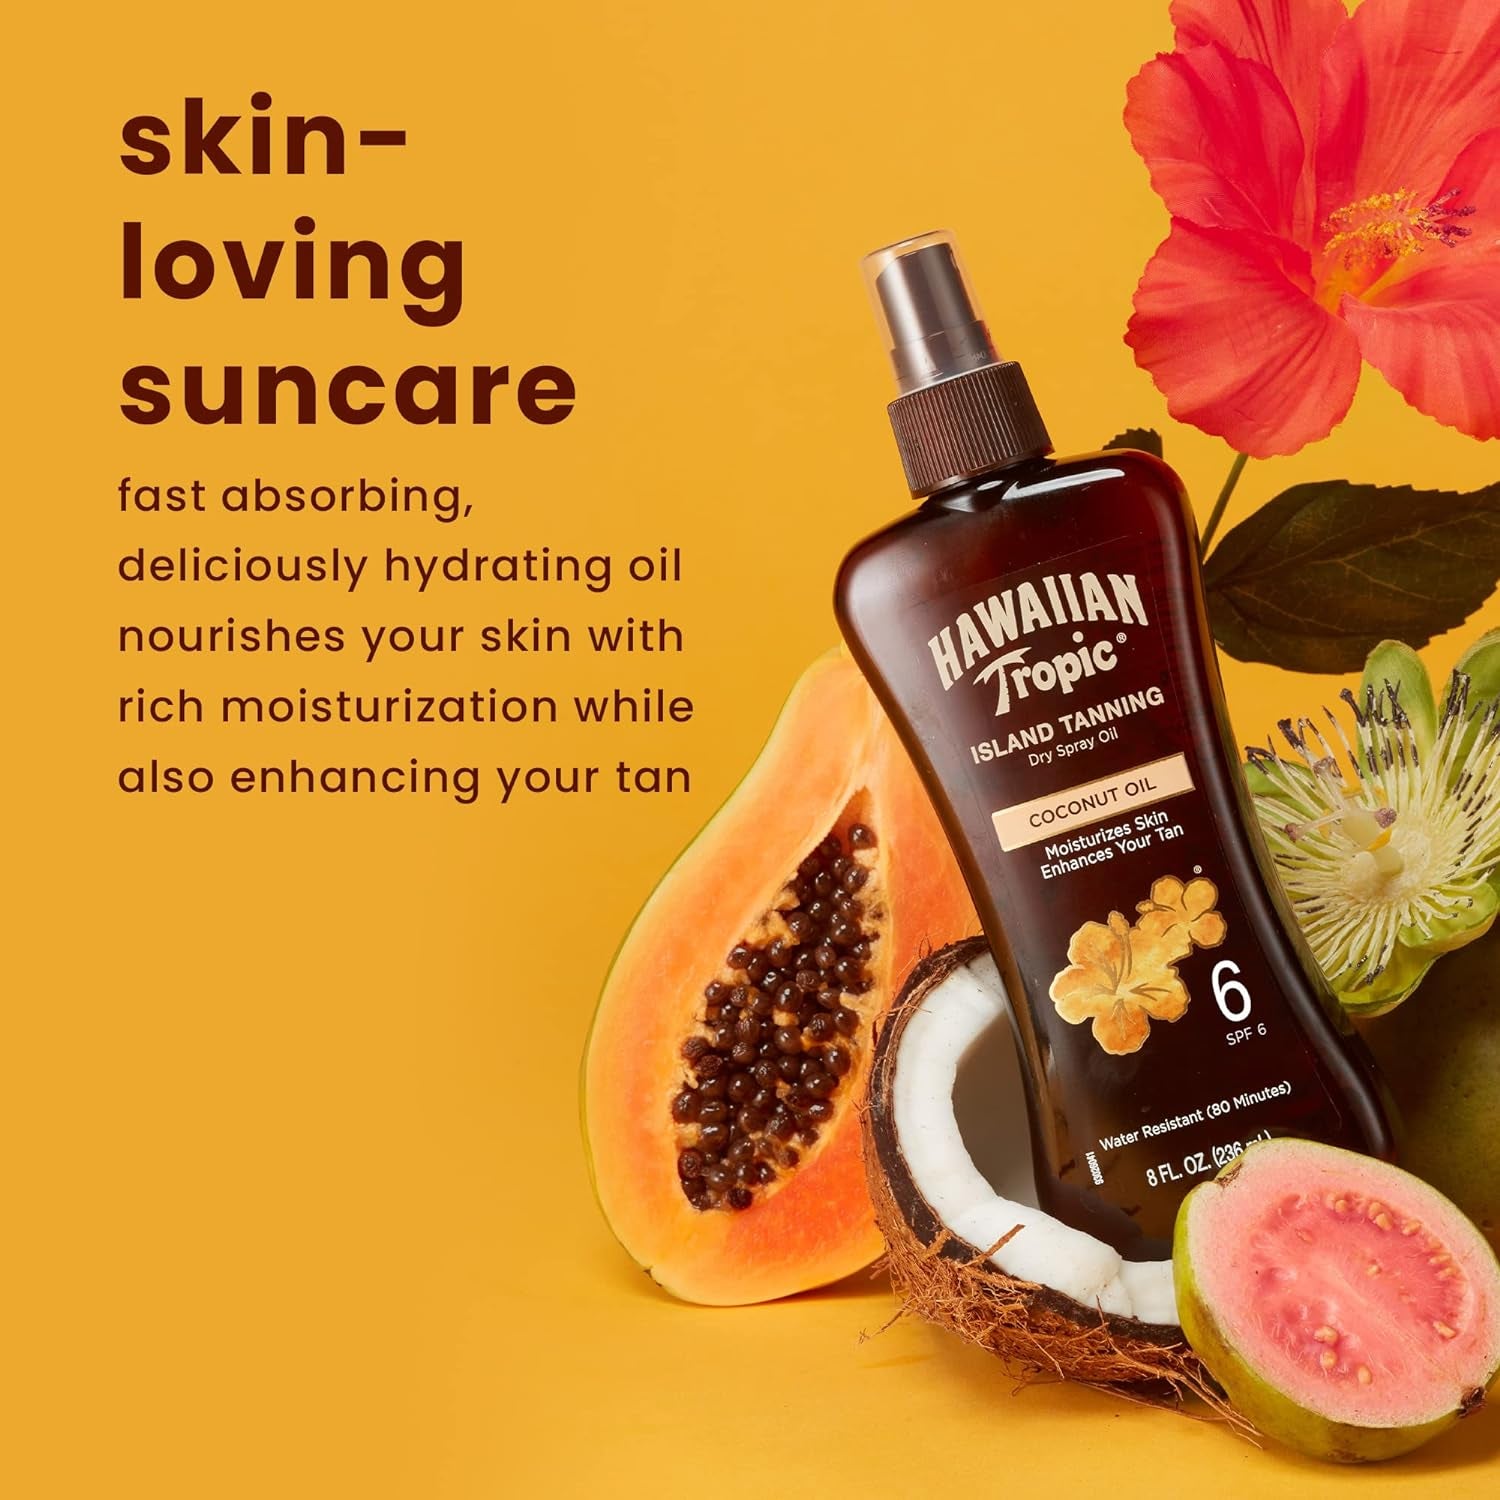 "Hawaiian Tropic Island Tanning Oil Spray Sunscreen SPF 6, 8Oz Twin Pack"